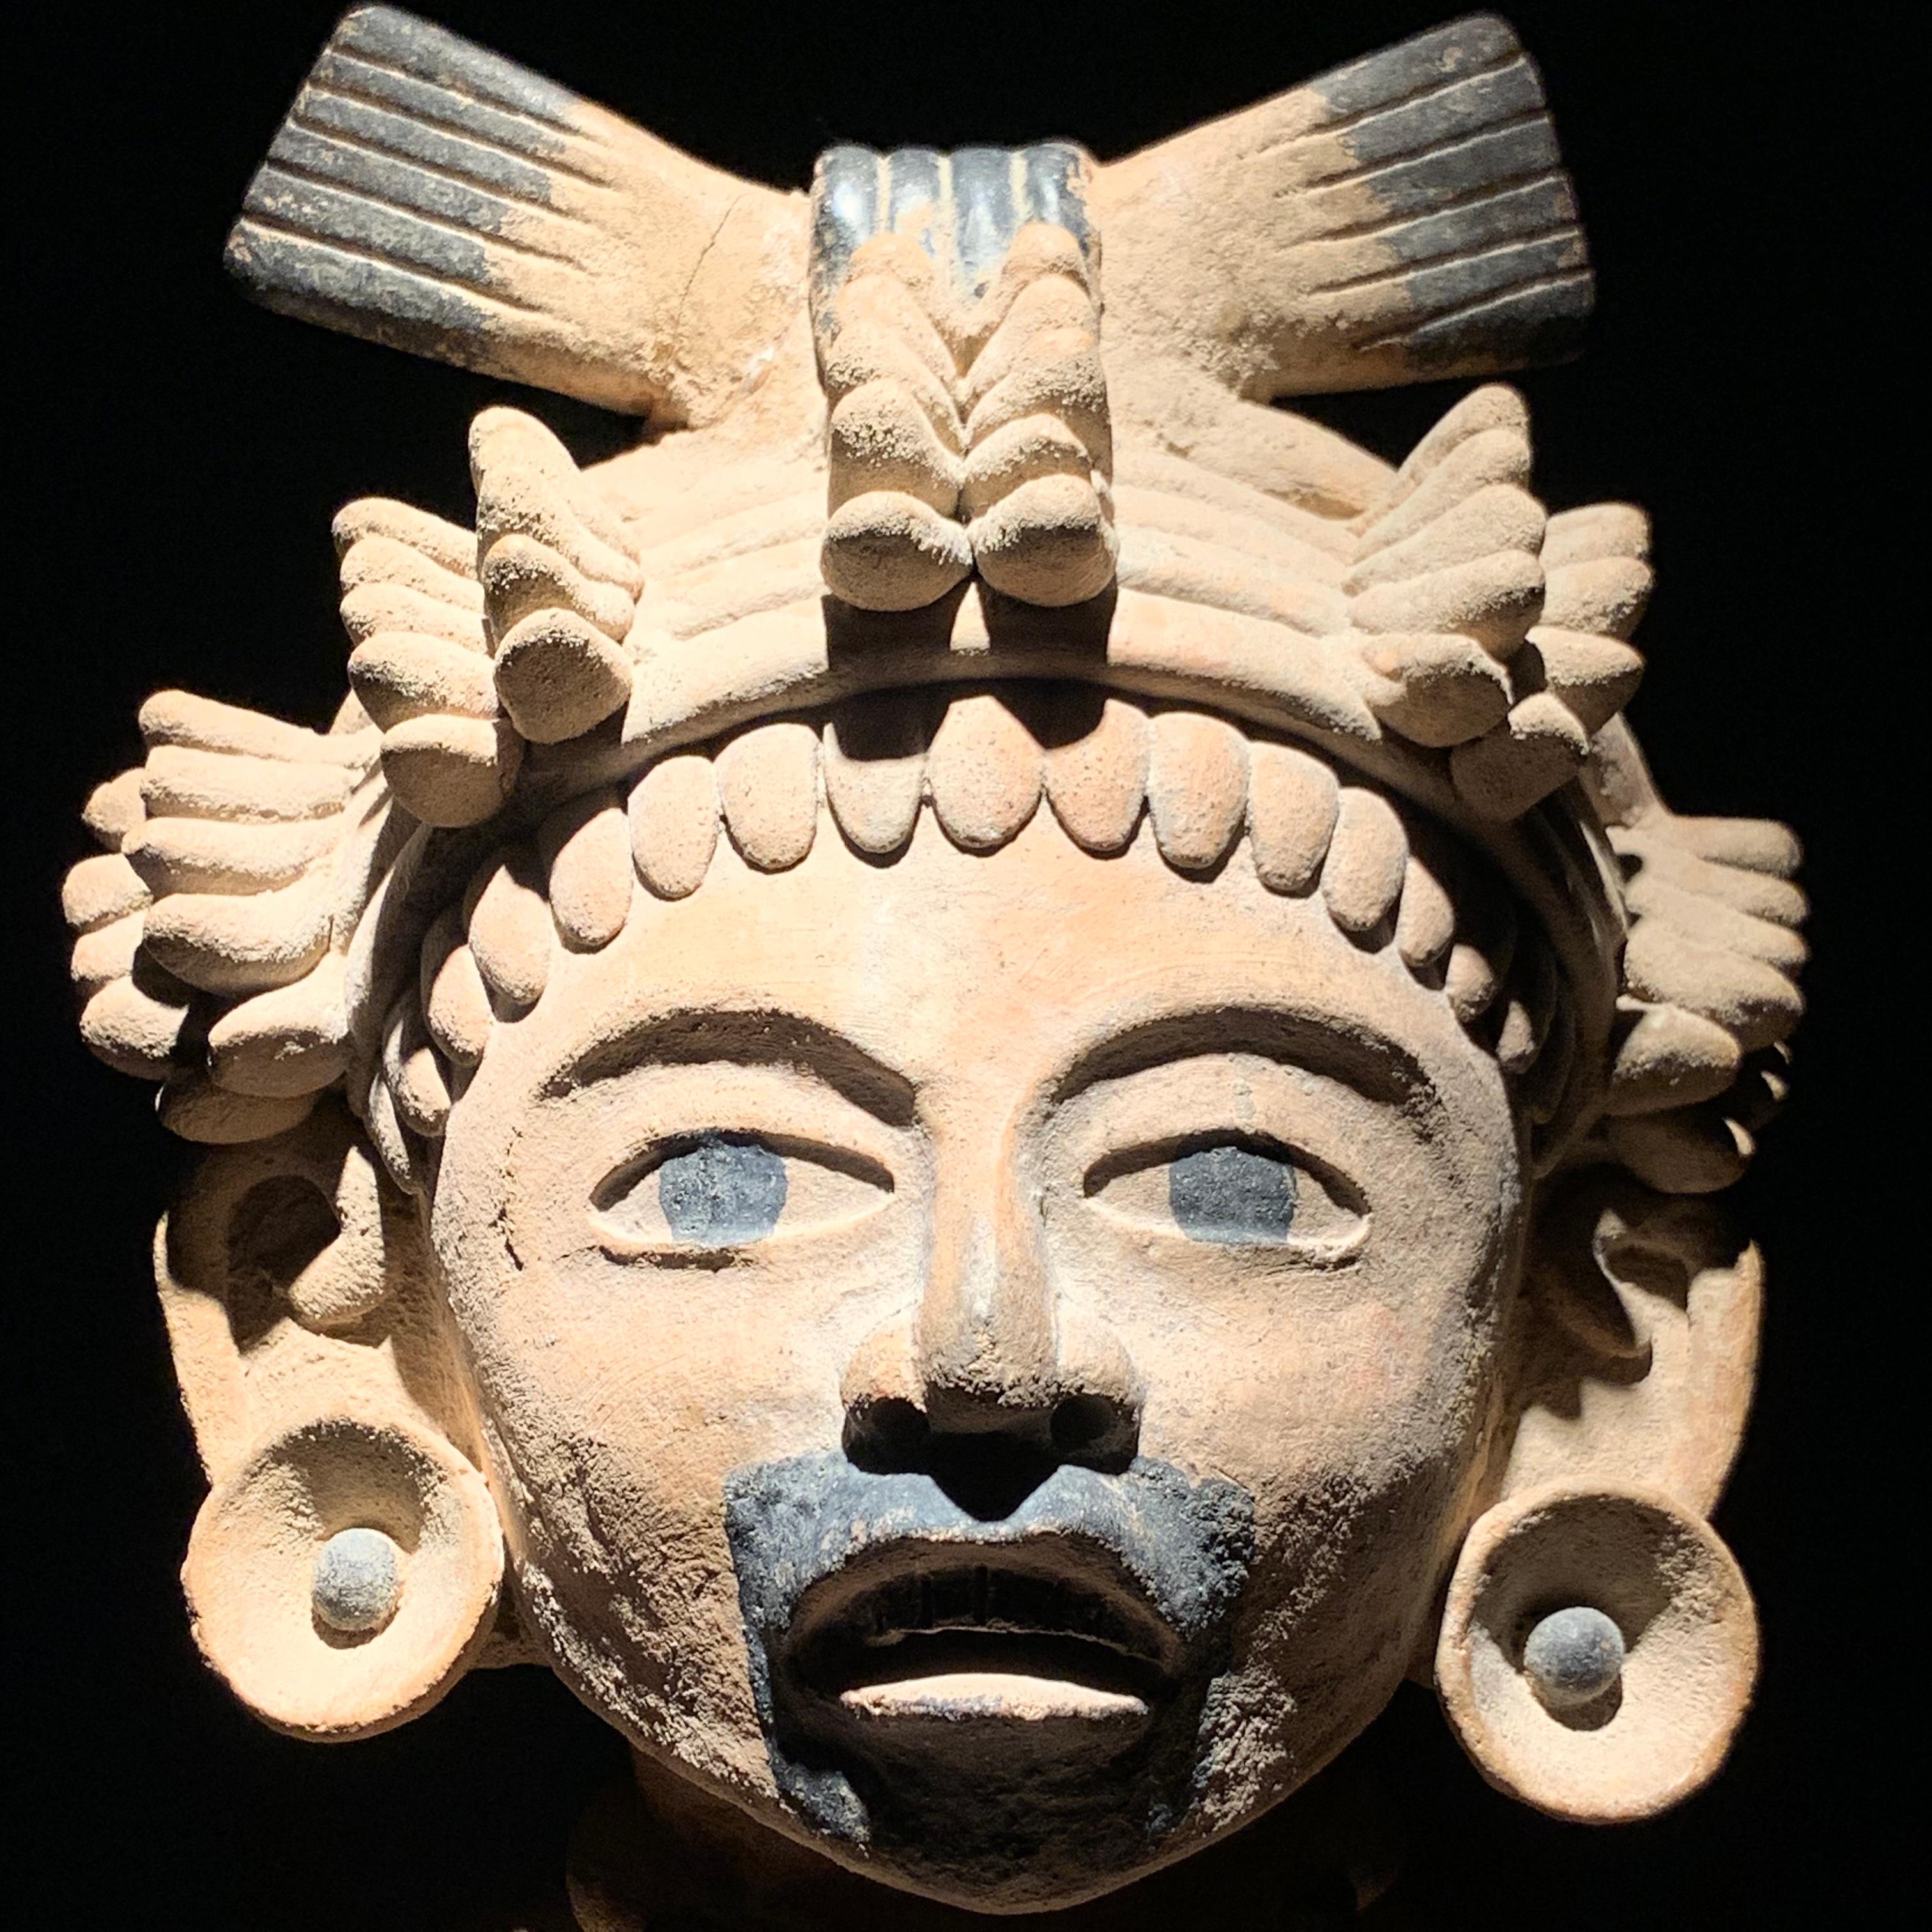 Veracruz Mexico Pre-Columbian ceramic Warrior figure sculpture - Sculpture by Unknown